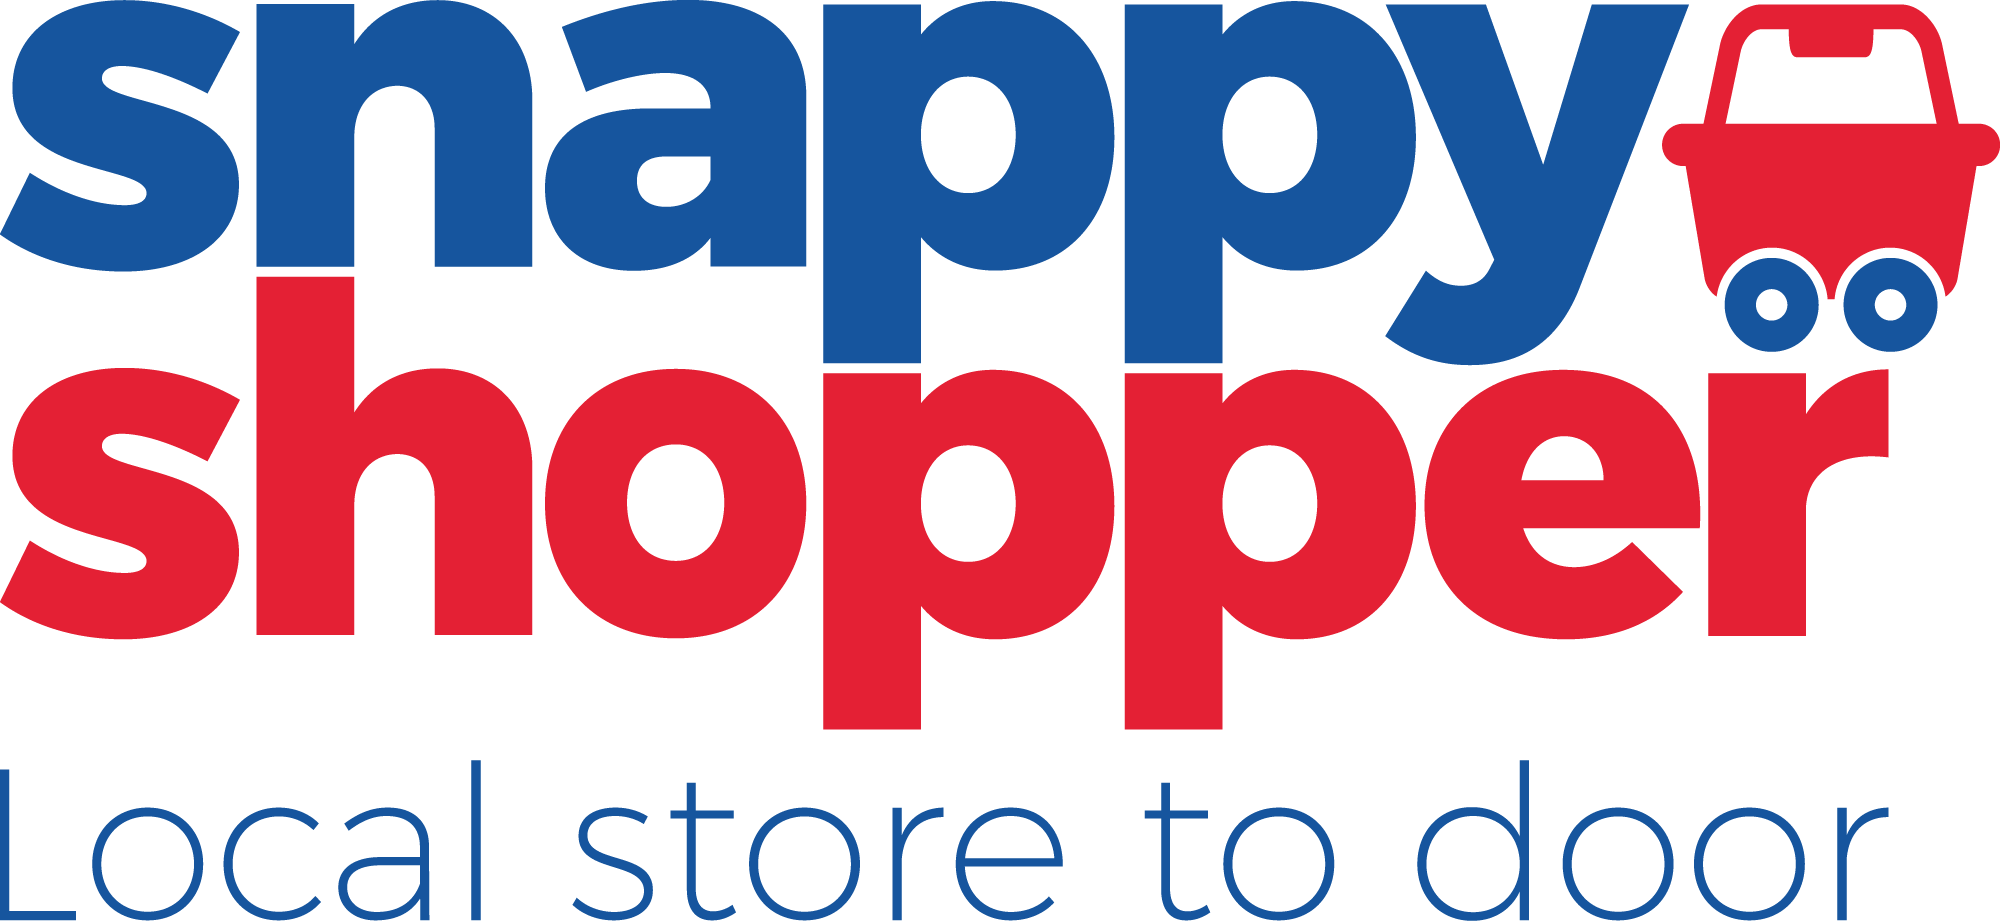 Snappy Shopper enjoys record-breaking orders as dark stores falter